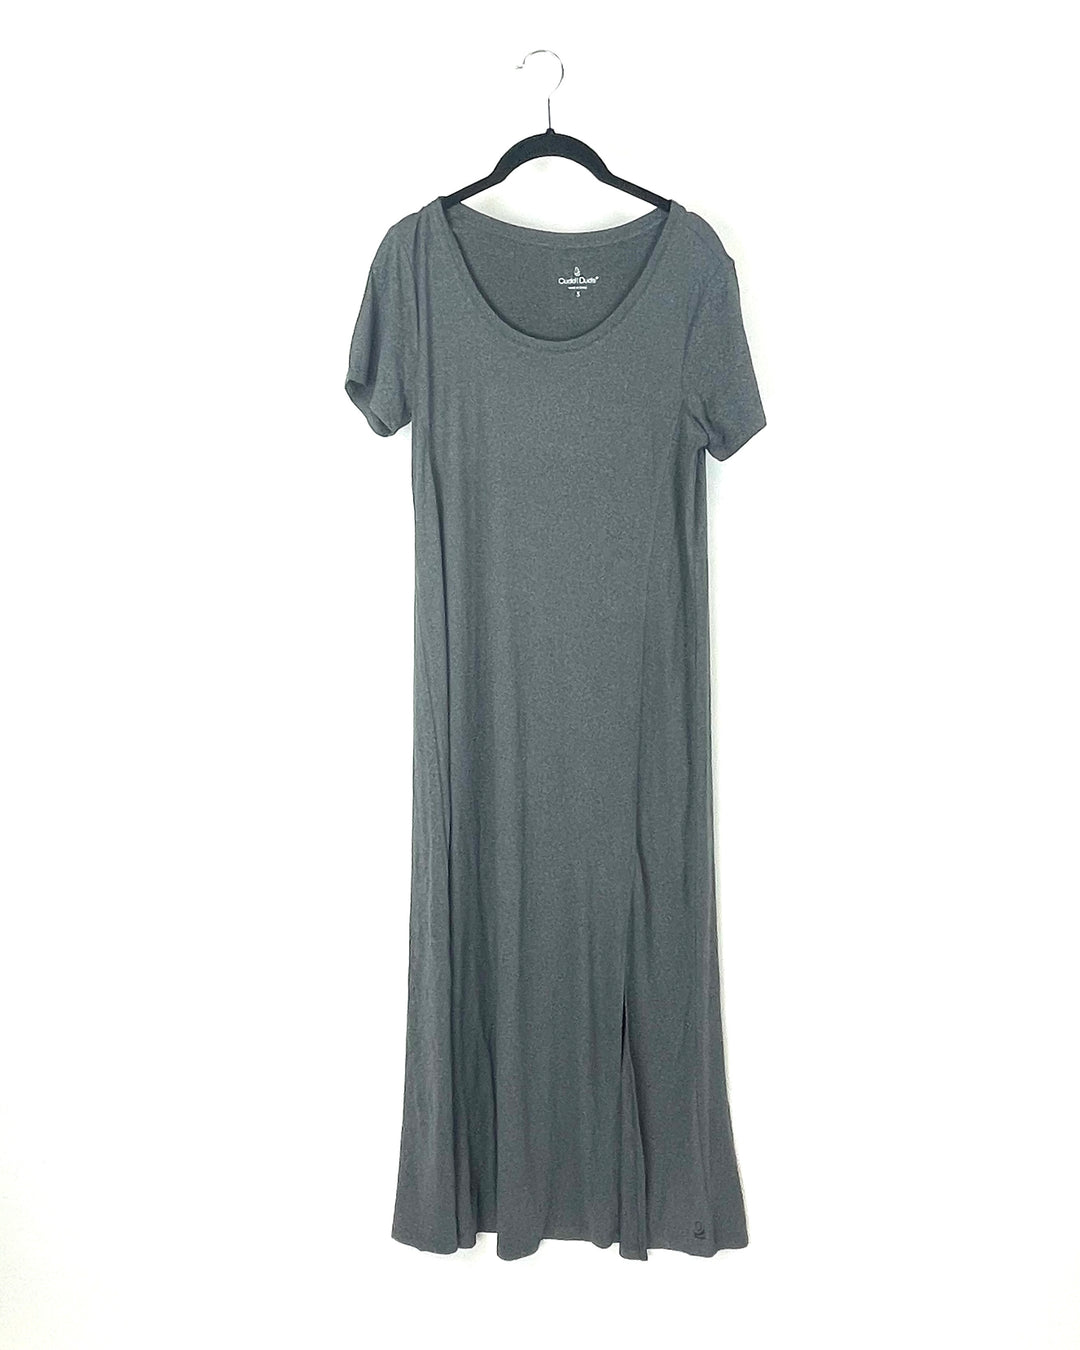 Grey Lounge Maxi Dress - Size 6/8